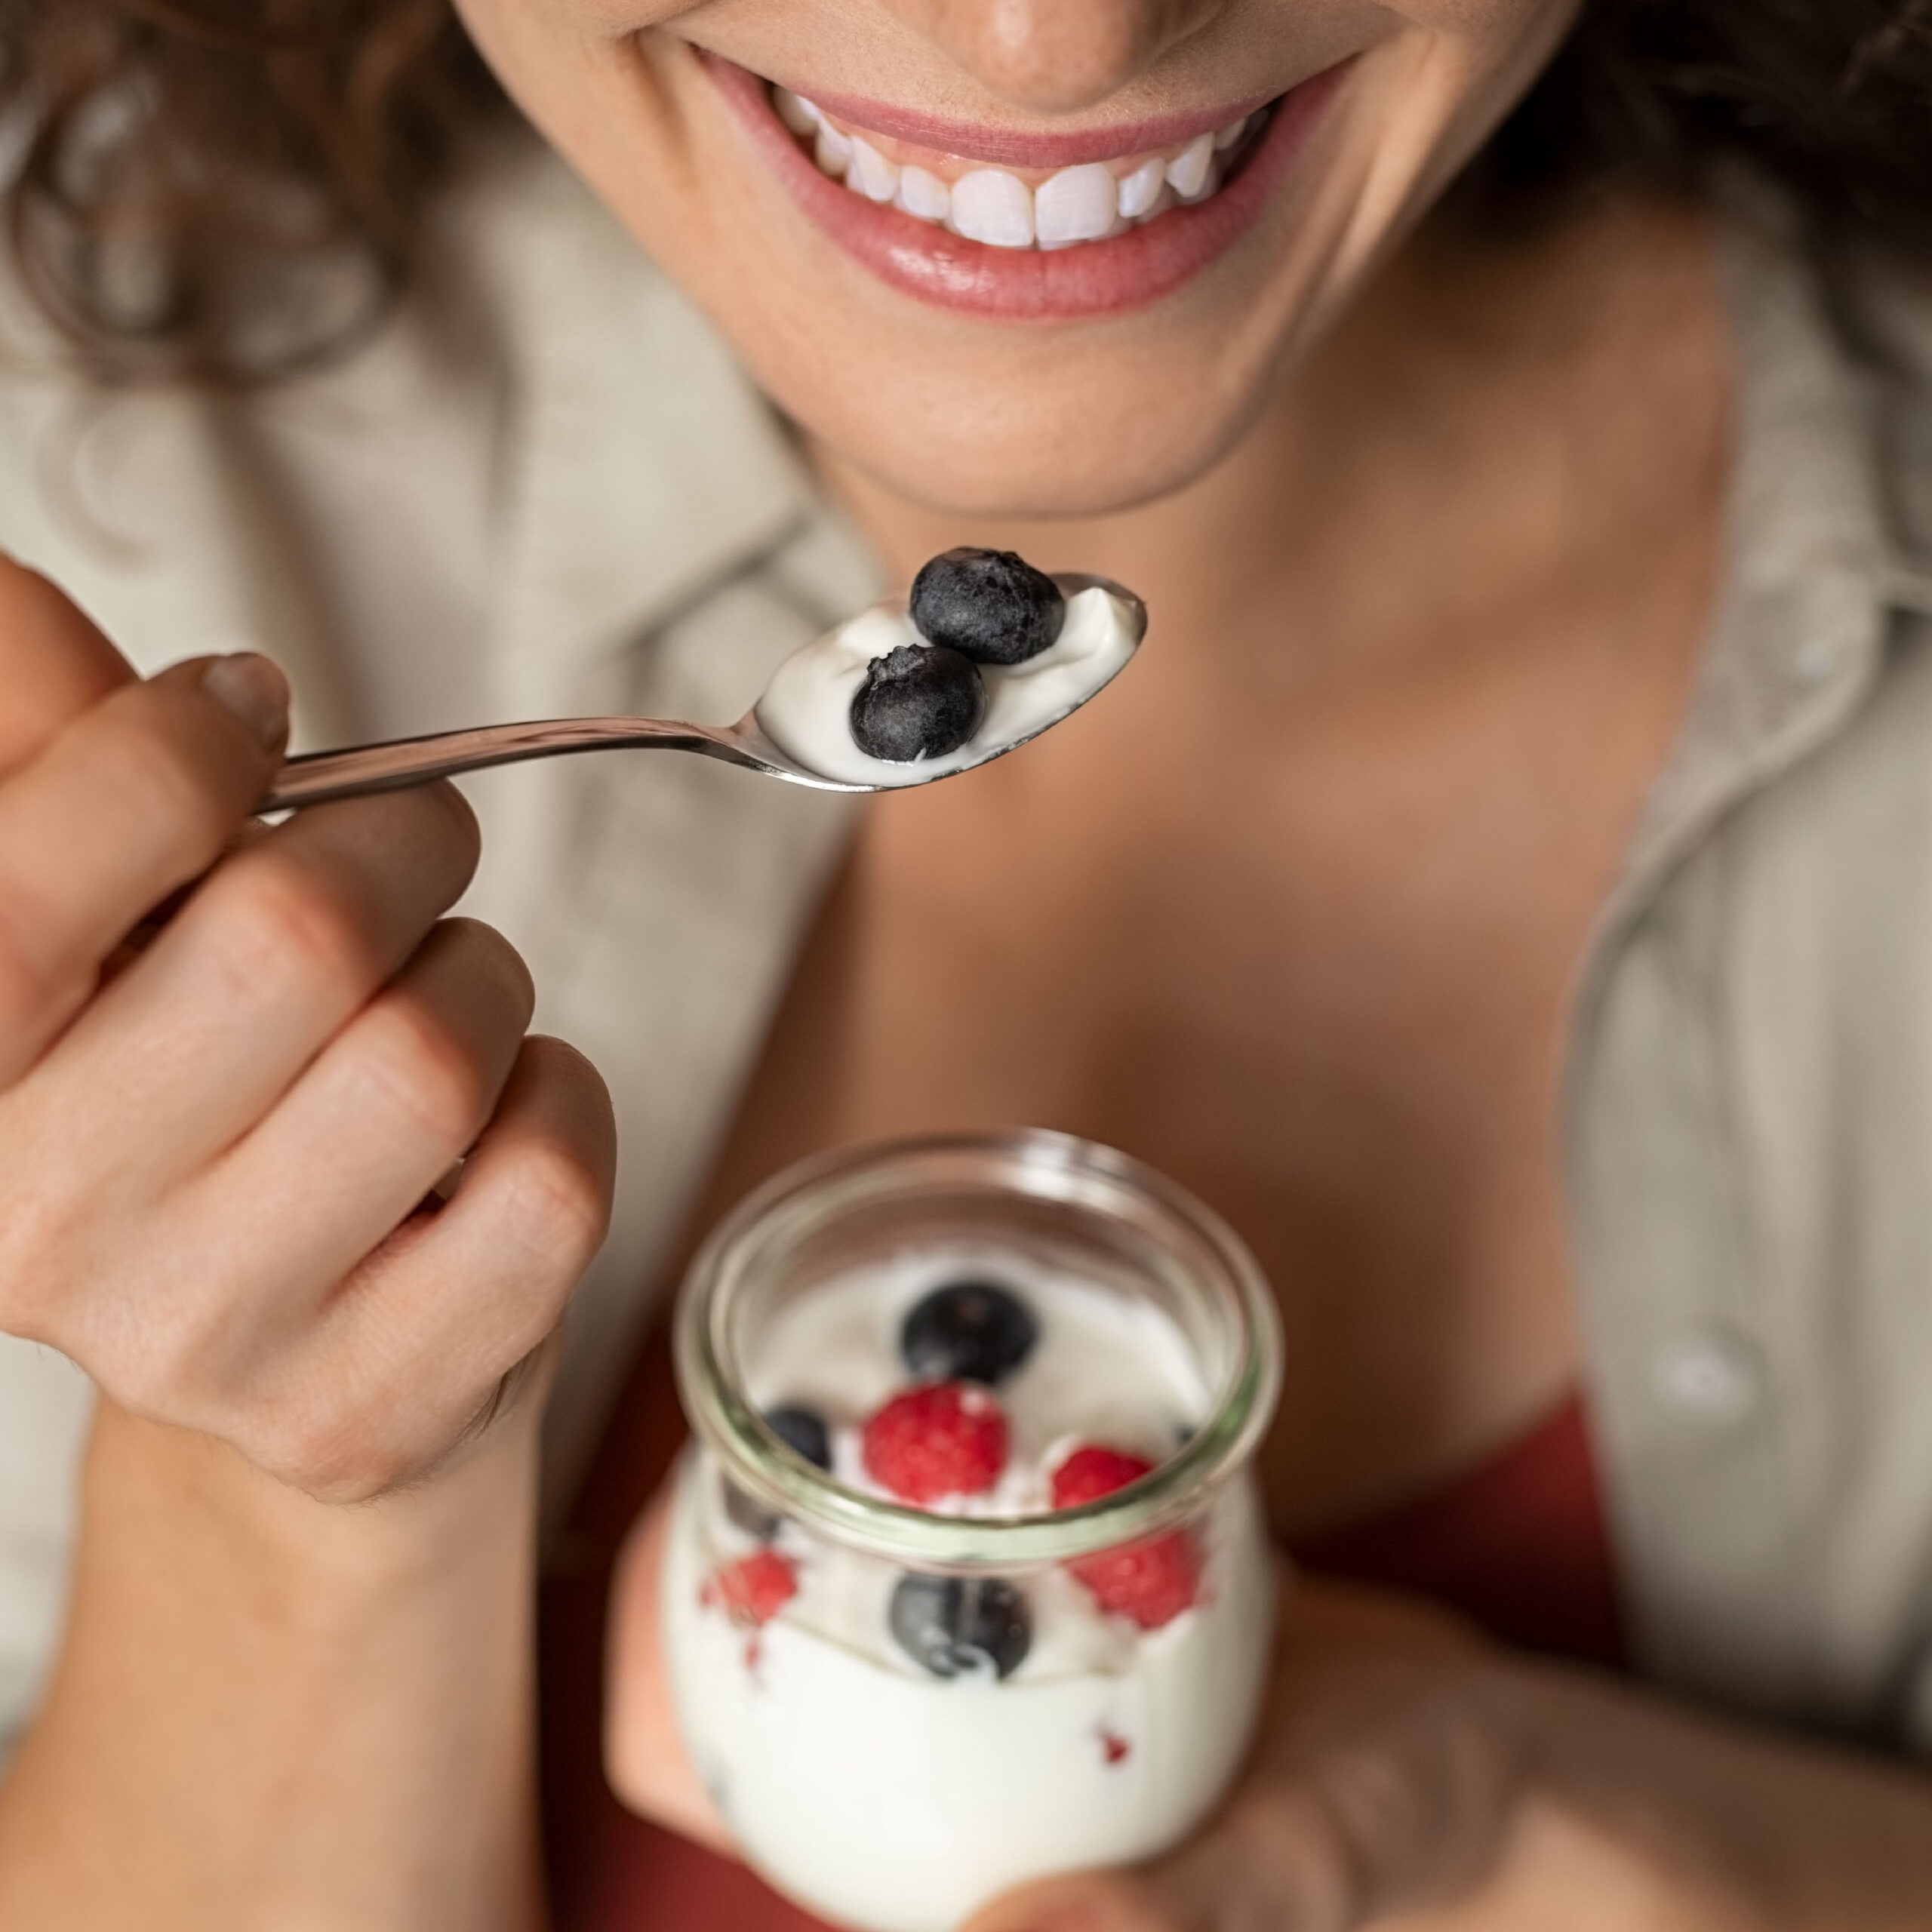 woman eating yogurt with blueberries